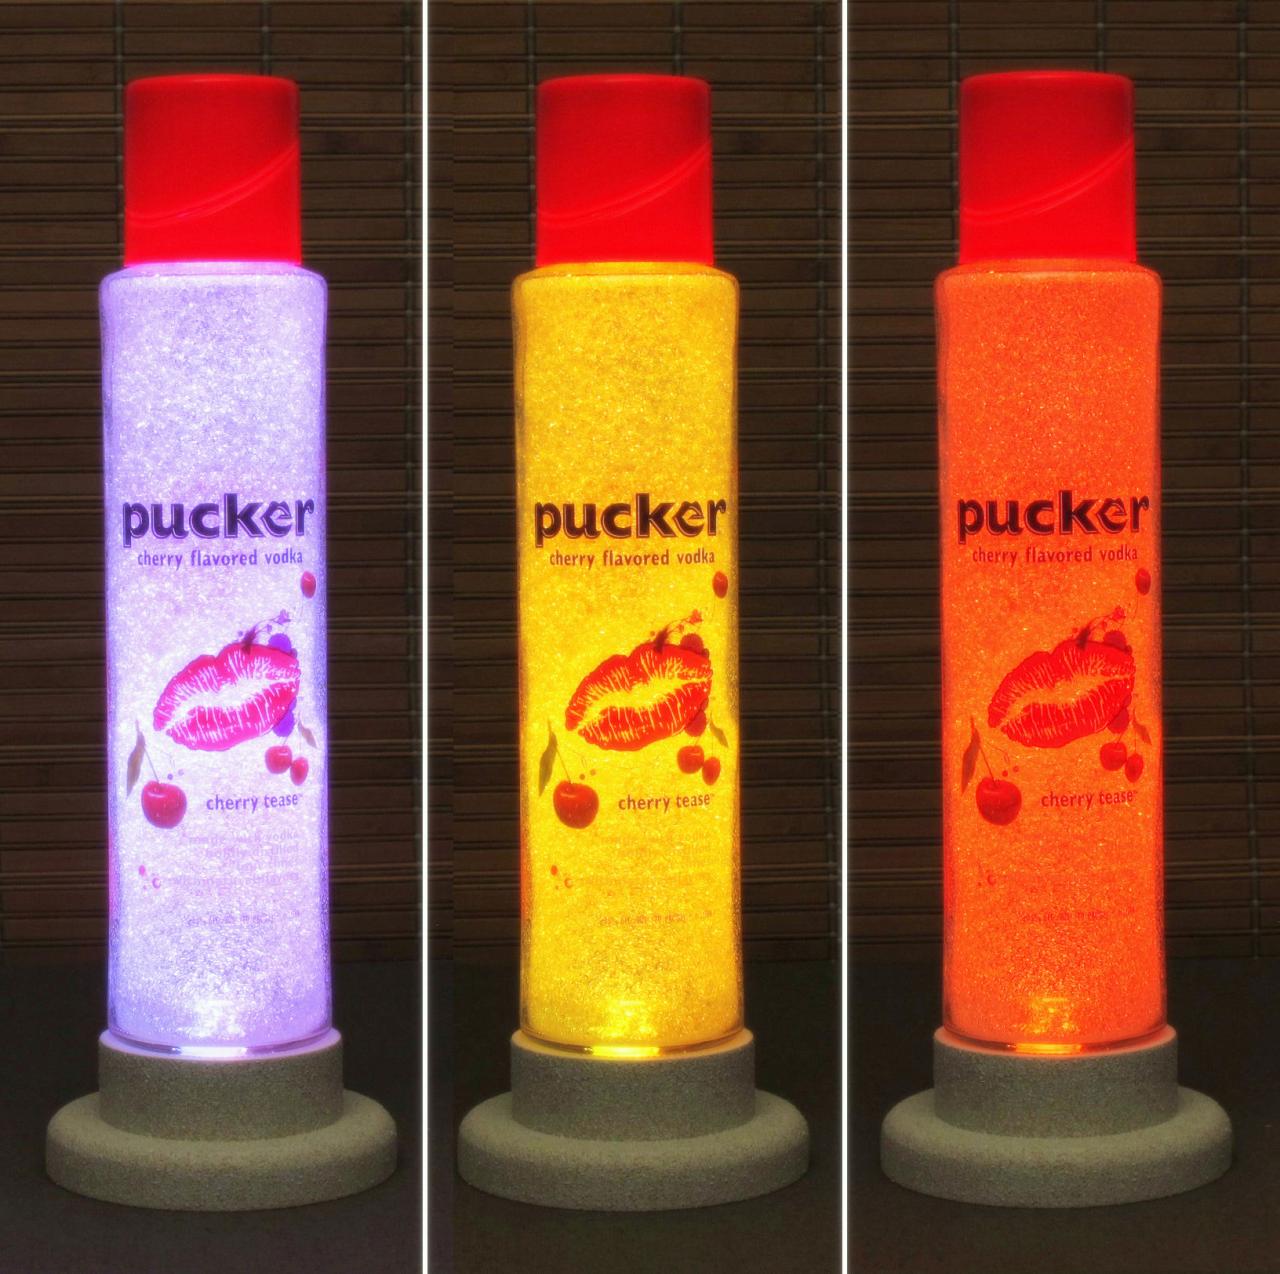 Pucker Cherry Tease Vodka Color Changing Led Remote Controlled Bottle Lamp/bar Light Bodacious Bottles